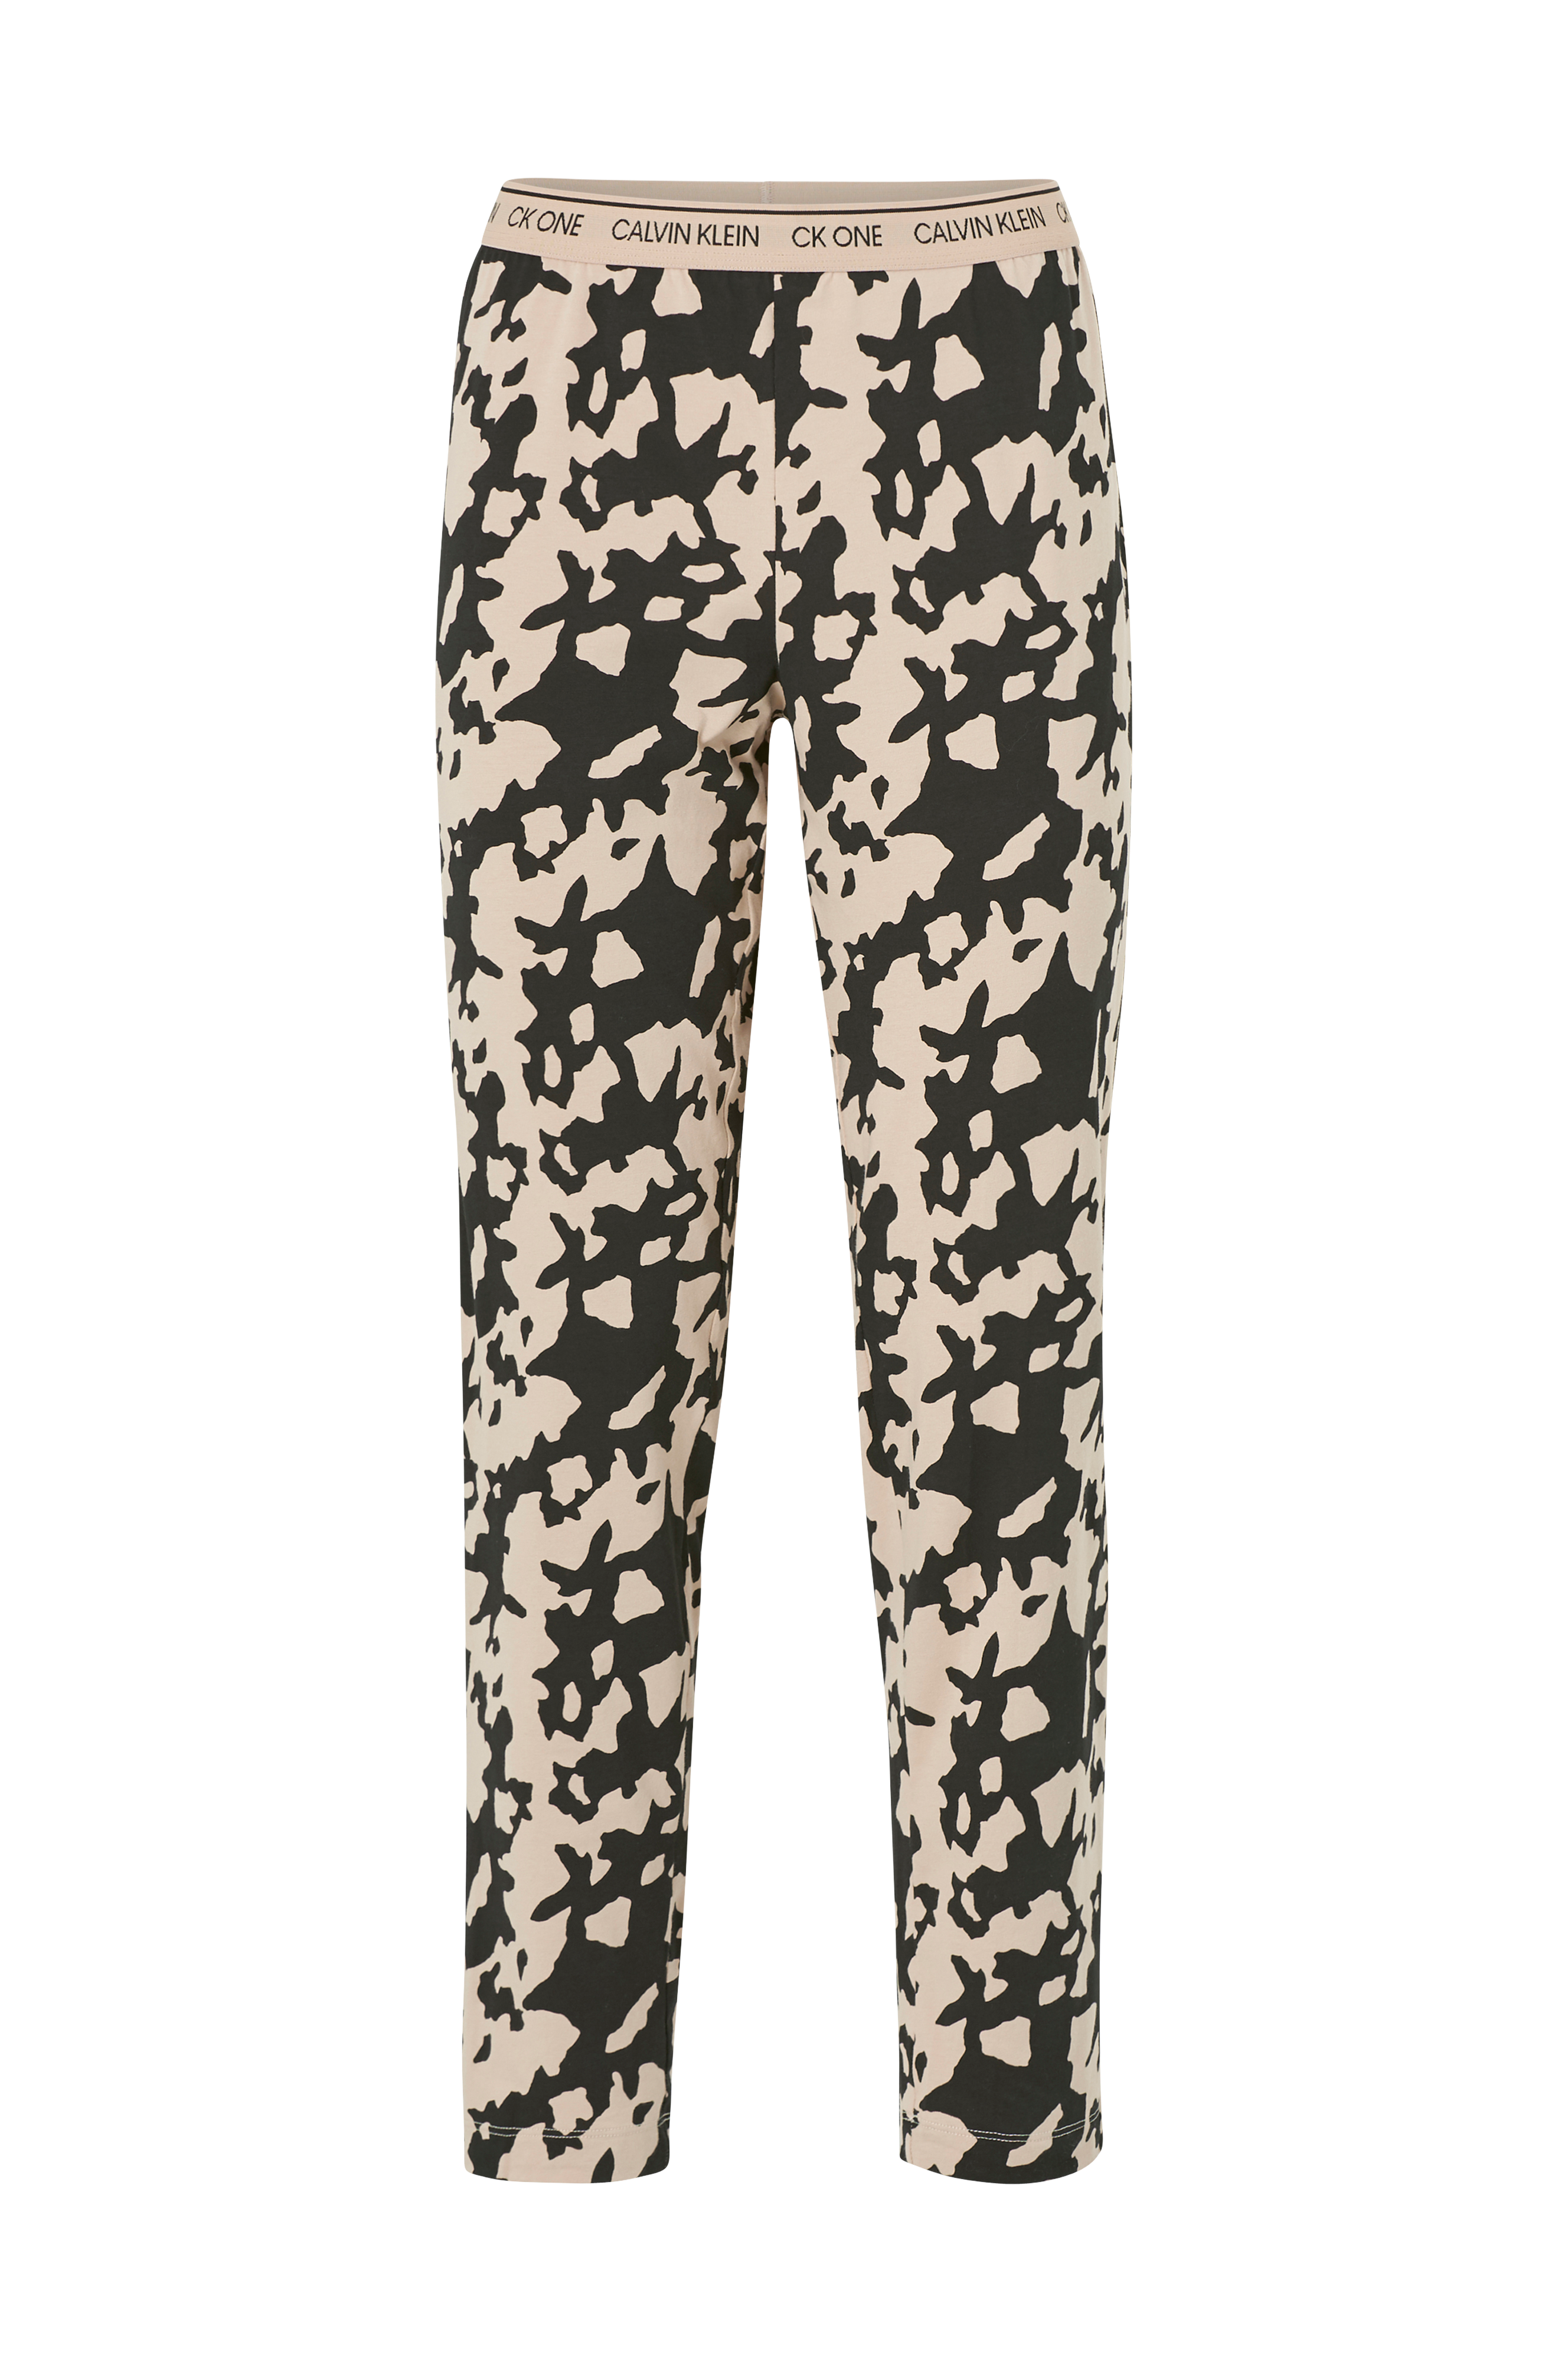 debat form venom Calvin Klein Underwear Pyjamasbukser - Natur - Pyjamas - Ellos.dk